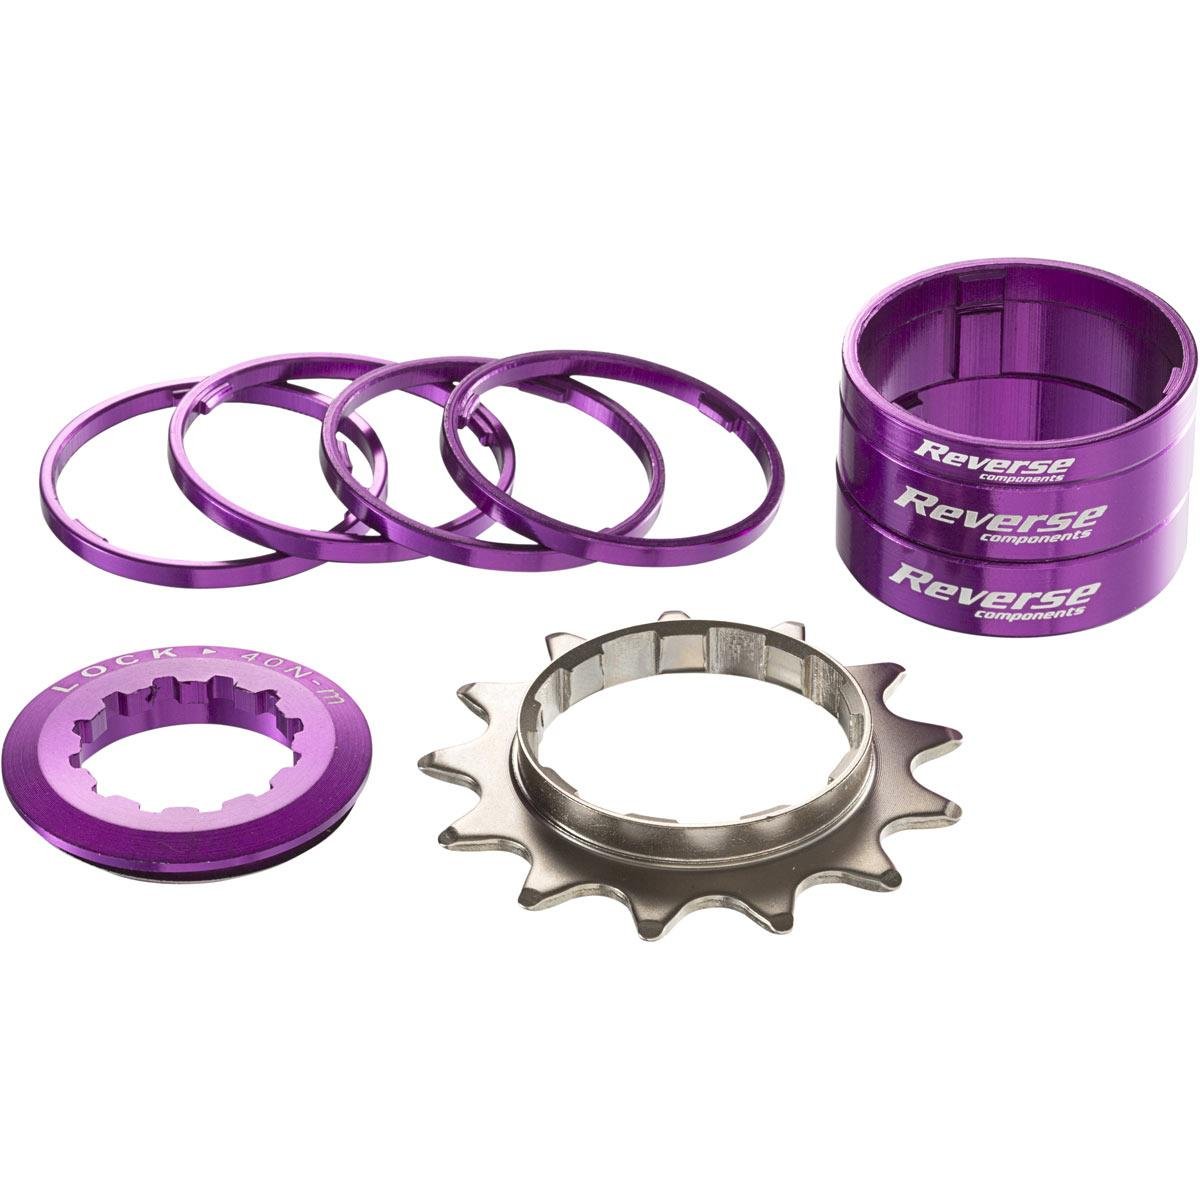 Reverse Components Singlespeed Conversion Kit  Purple, 13 Teeth